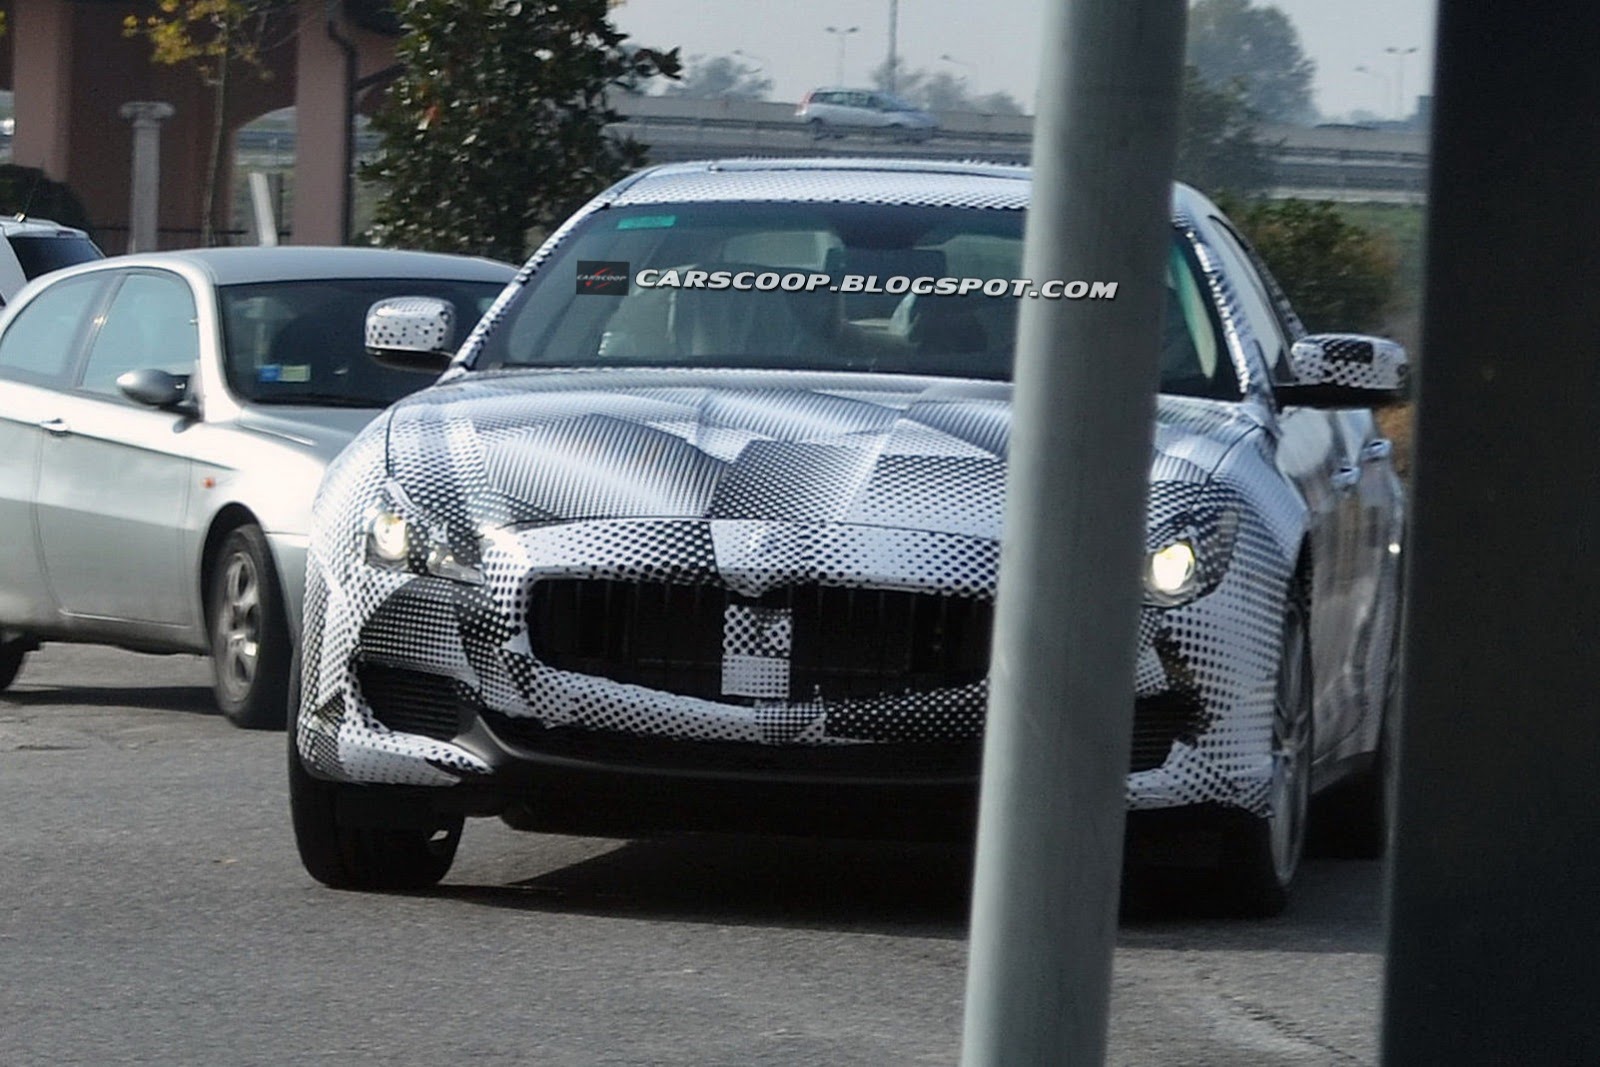 Maserati Quattroporte replacement spied